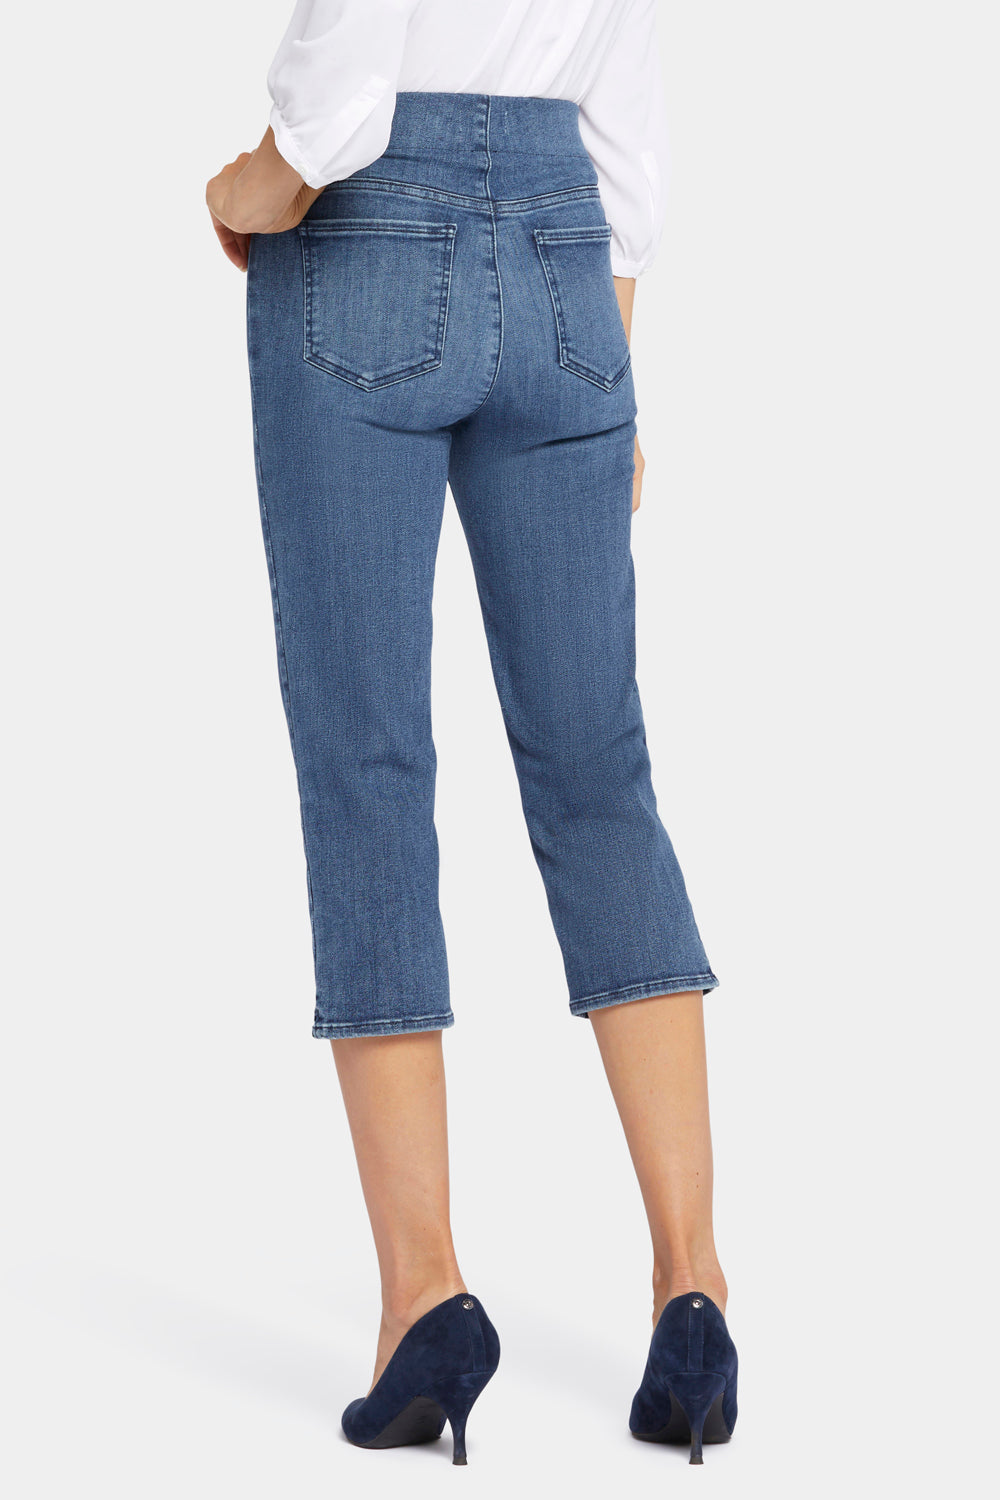 NYDJ Dakota Crop Pull-On Jeans In SpanSpring™ Denim With Side Slits - Caliente